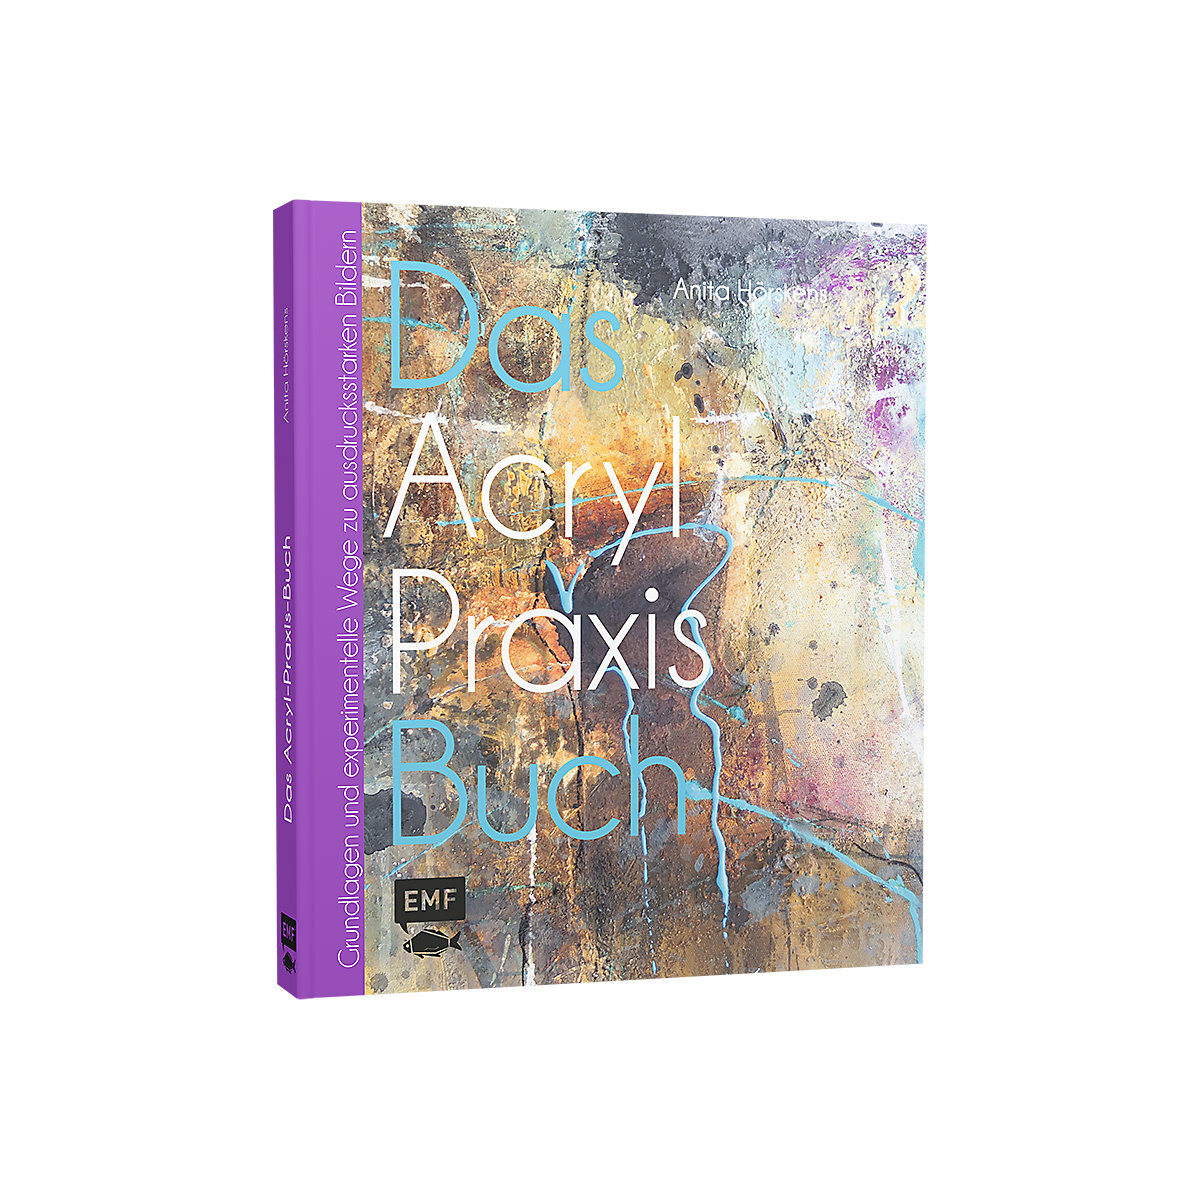 Das Acryl-Praxisbuch